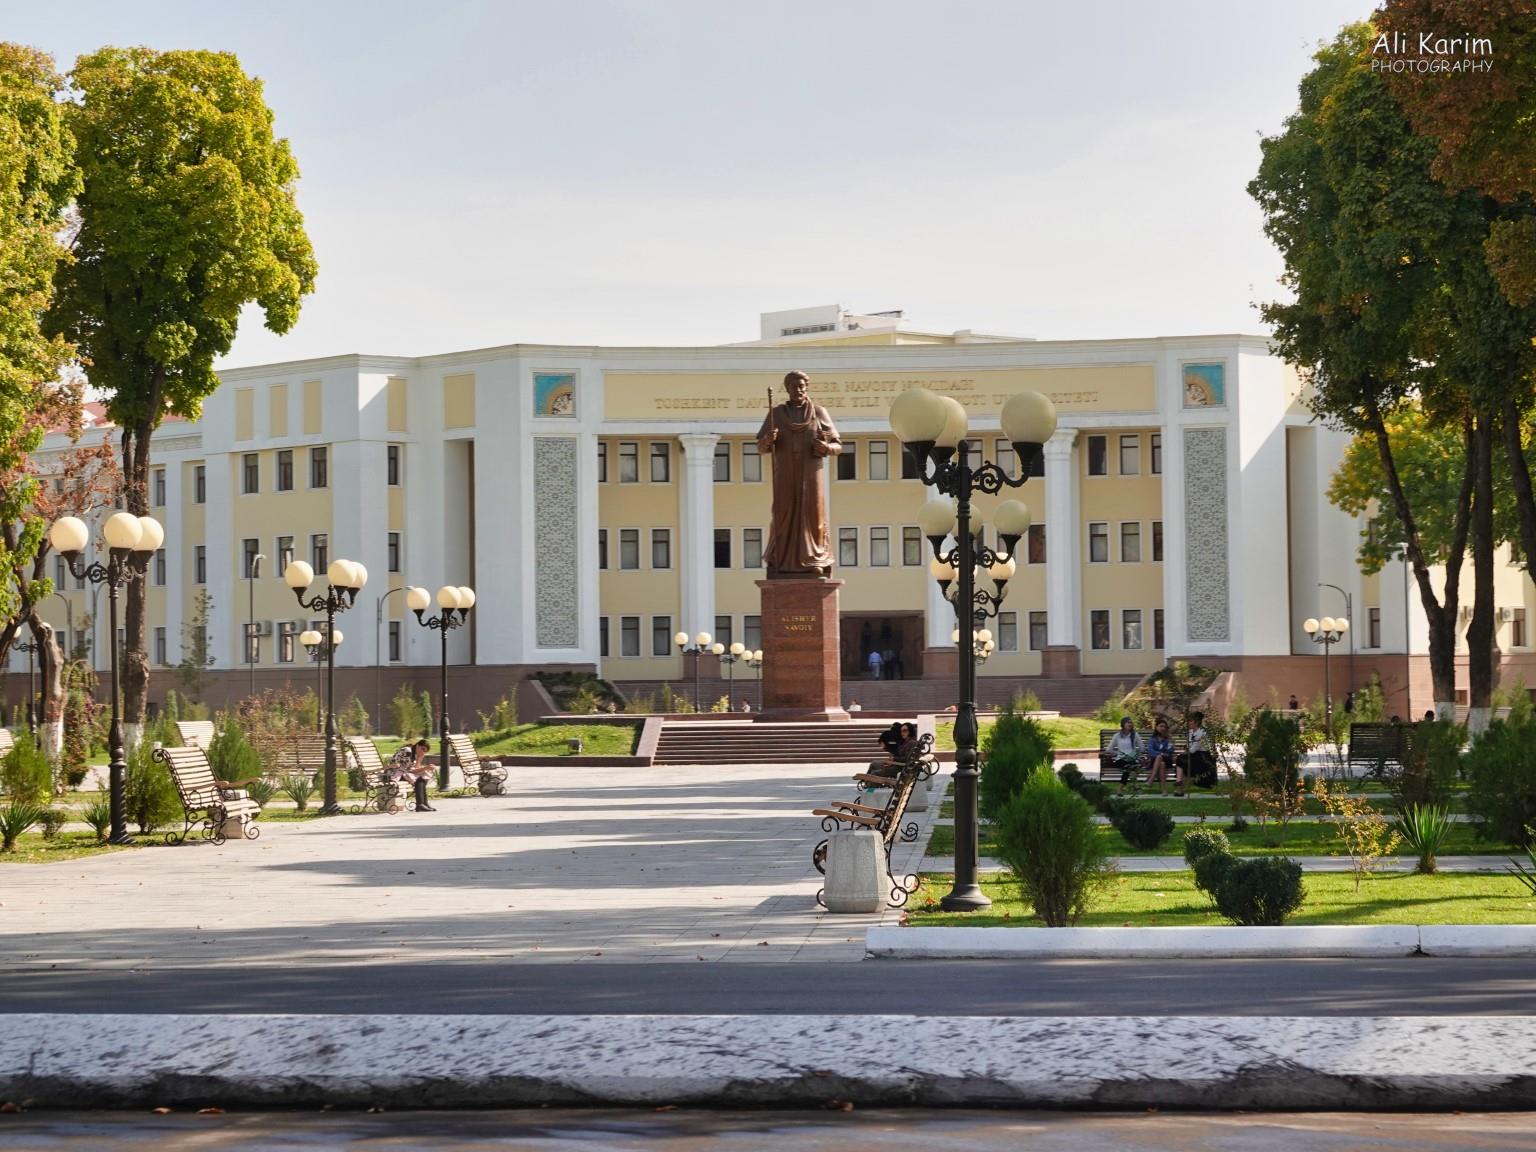 Tashkent, Oct 2019, Interesting Building, statue & park/gardens